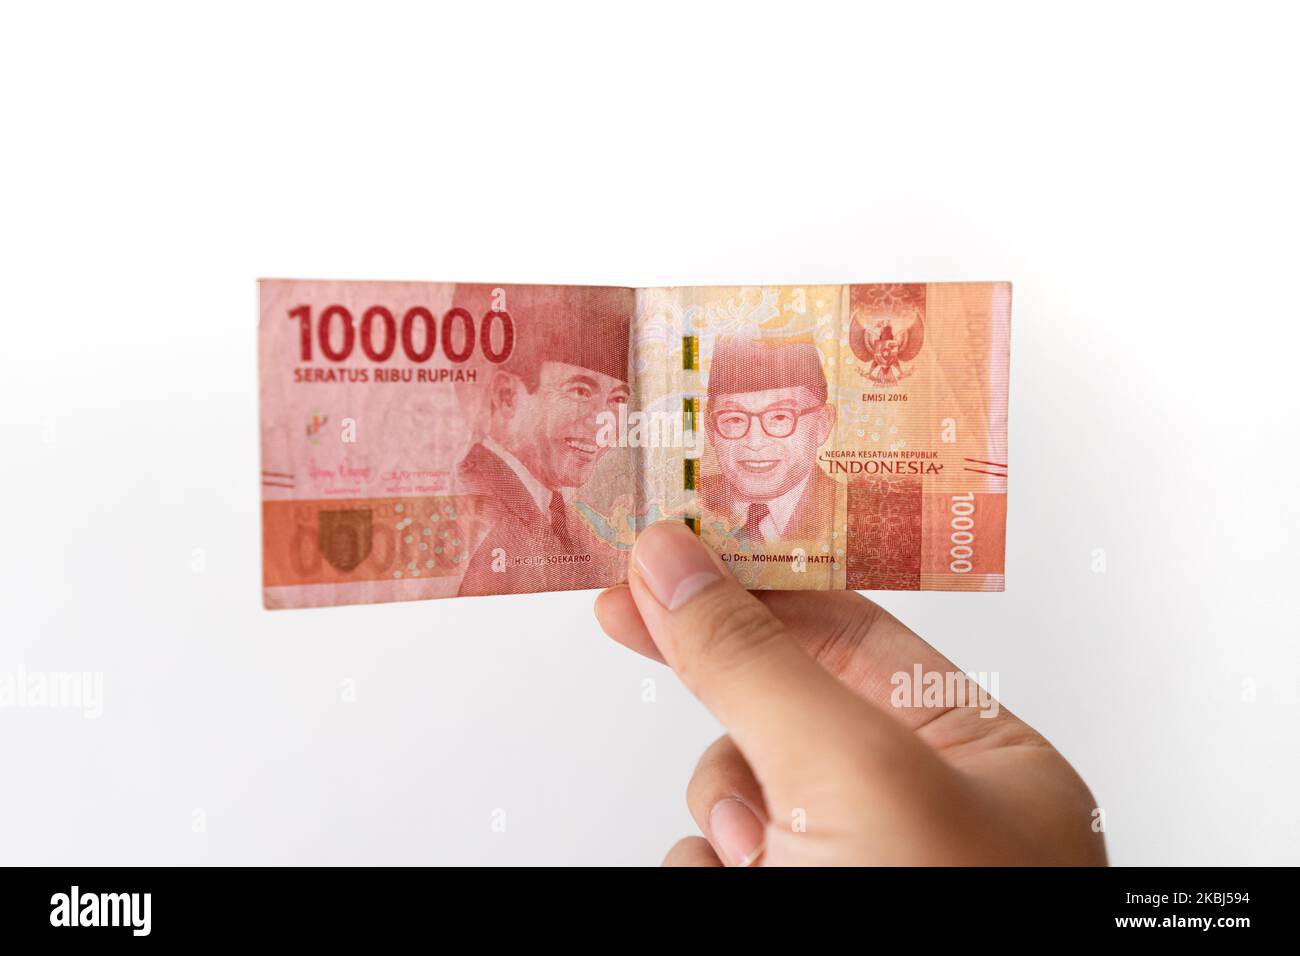 Semarang, Indonesia - November 4, 2022: A hand holds a 100,000 Rupiah money. Stock Photo